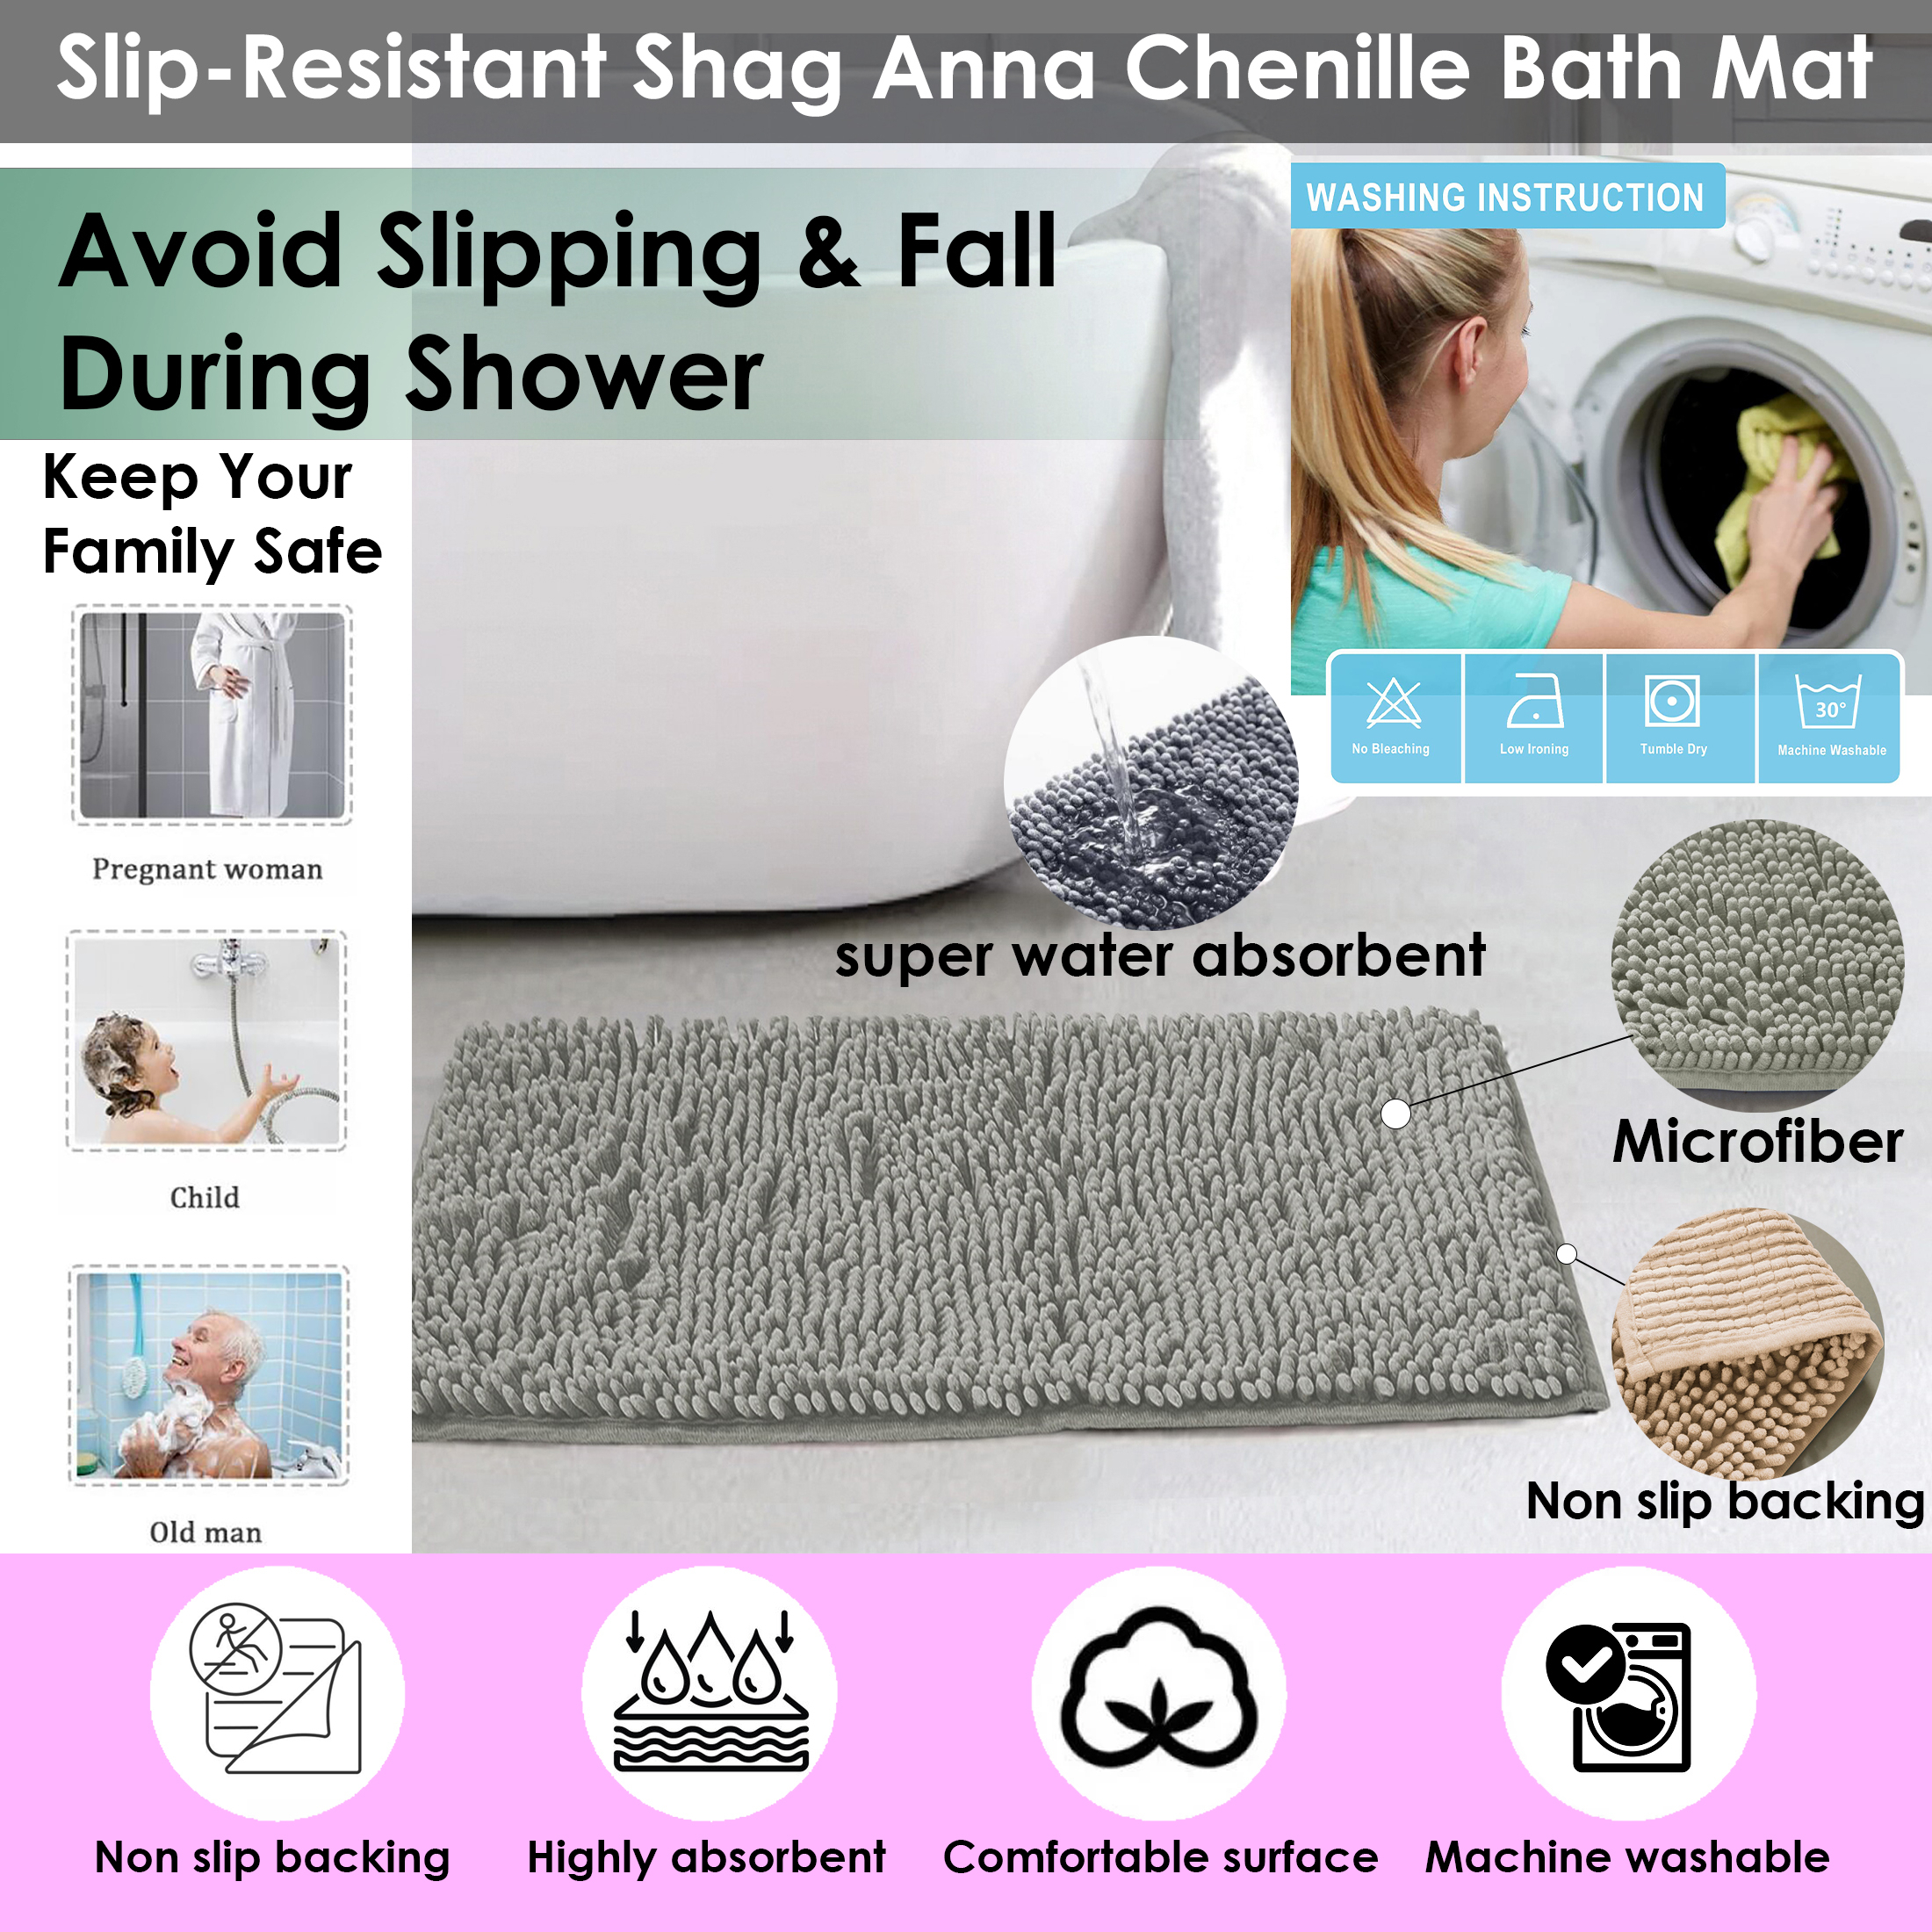 Slip-Resistant Shag Anna Chenille Soft Absorbent Bath Mat Bathroom Rug 17 X 24 - Navy